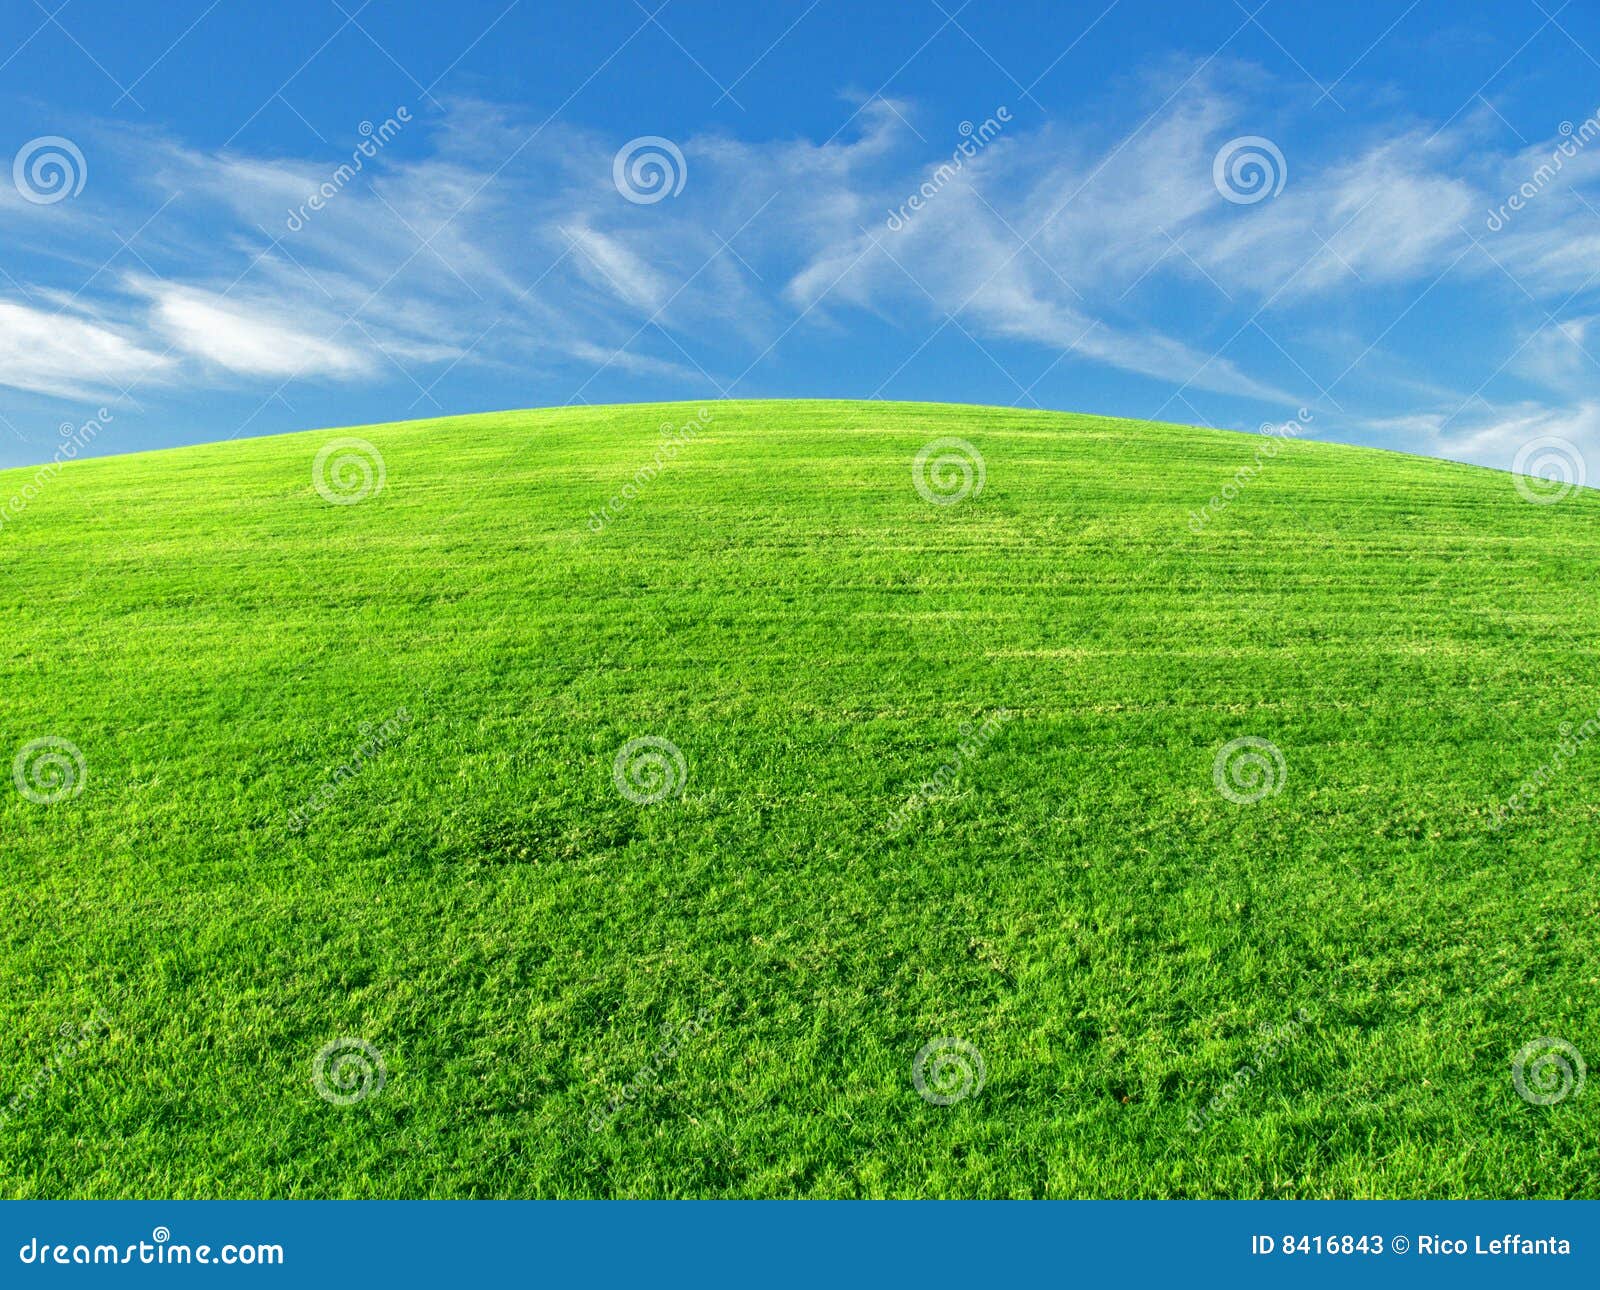 grassy hill